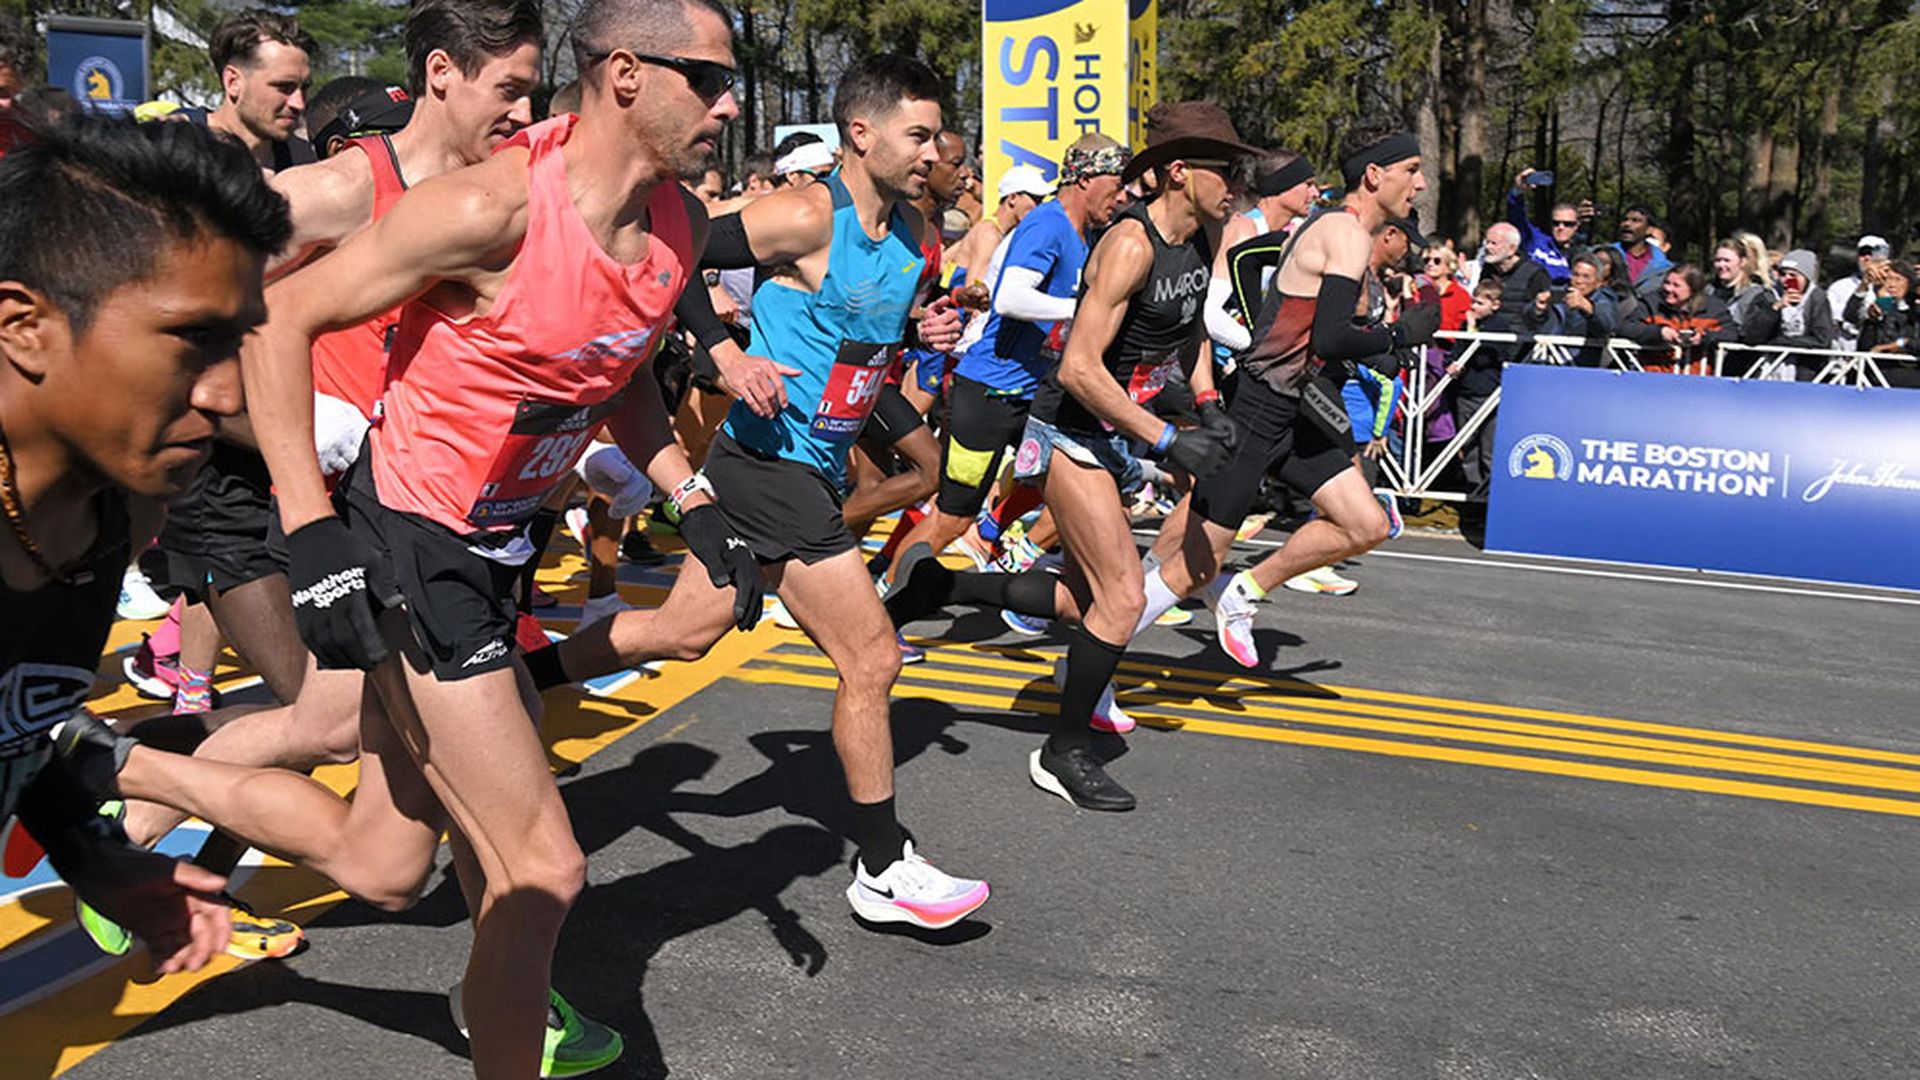 Chris Zuerner running the Boston Marathon. Photo: Courtesy of Chris Zuerner